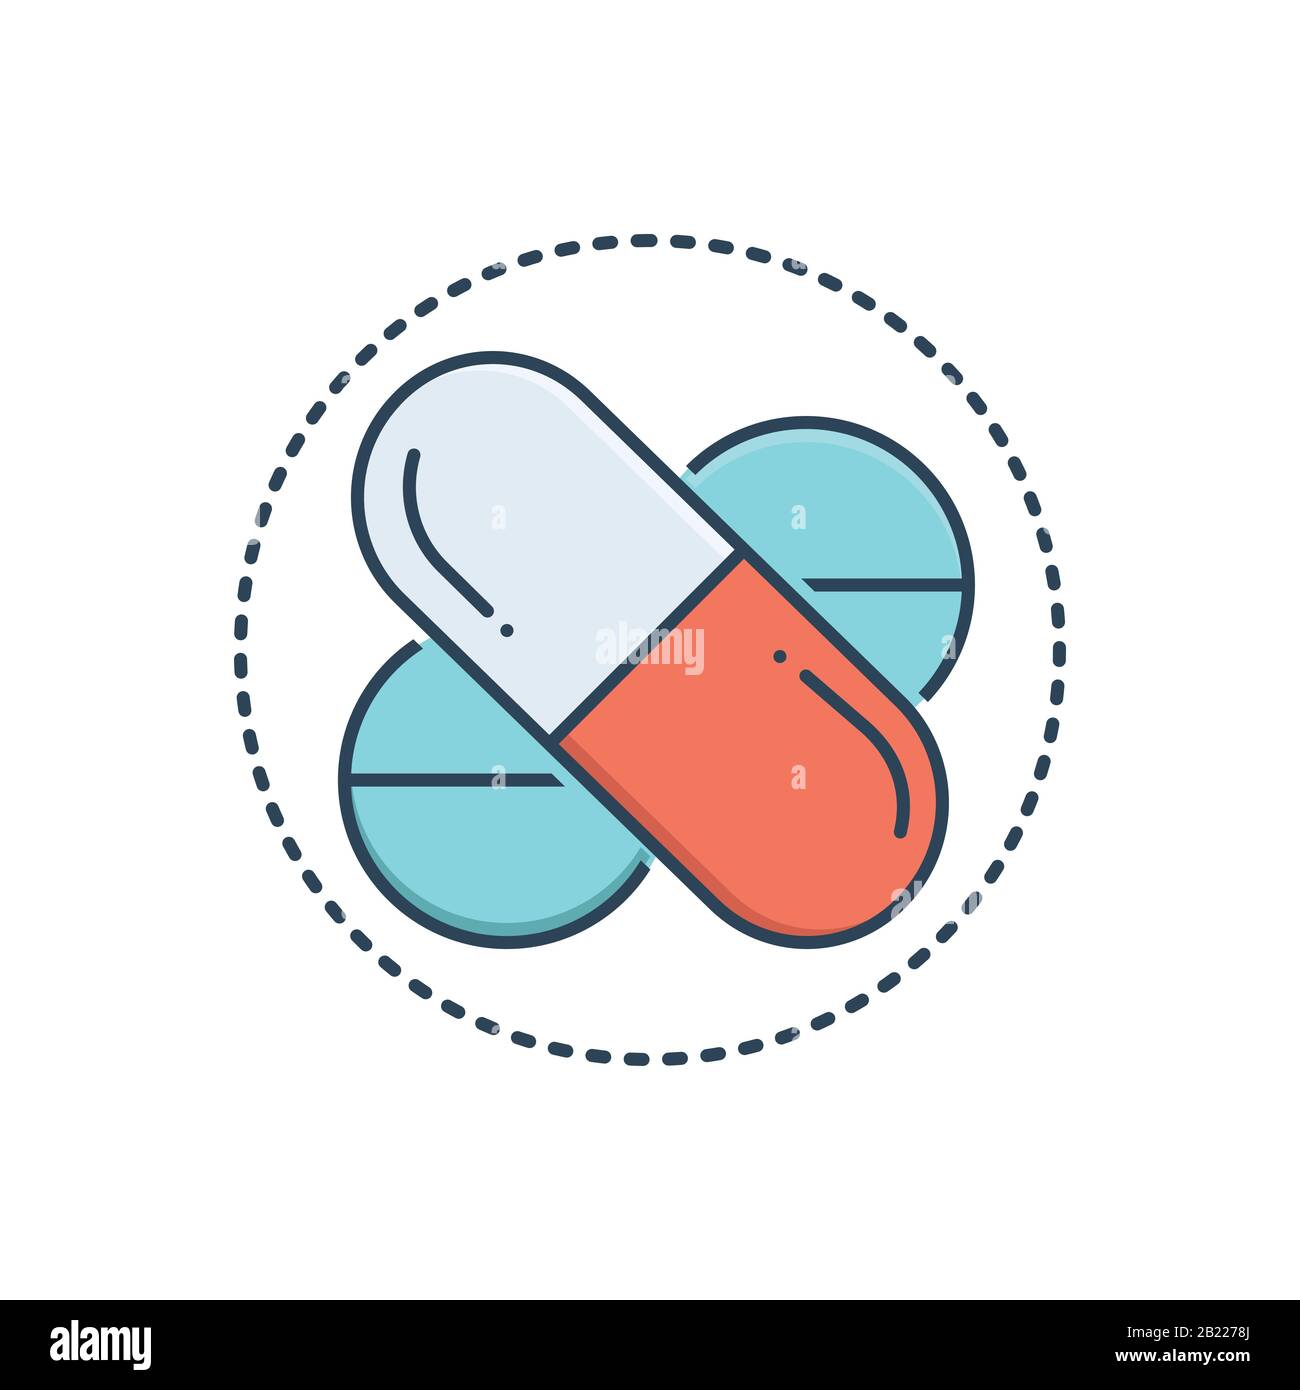 medicine icon, antibiotic icon, pills icon, medication icon, bag icon, hand  icon, holding icon, pictogram icon